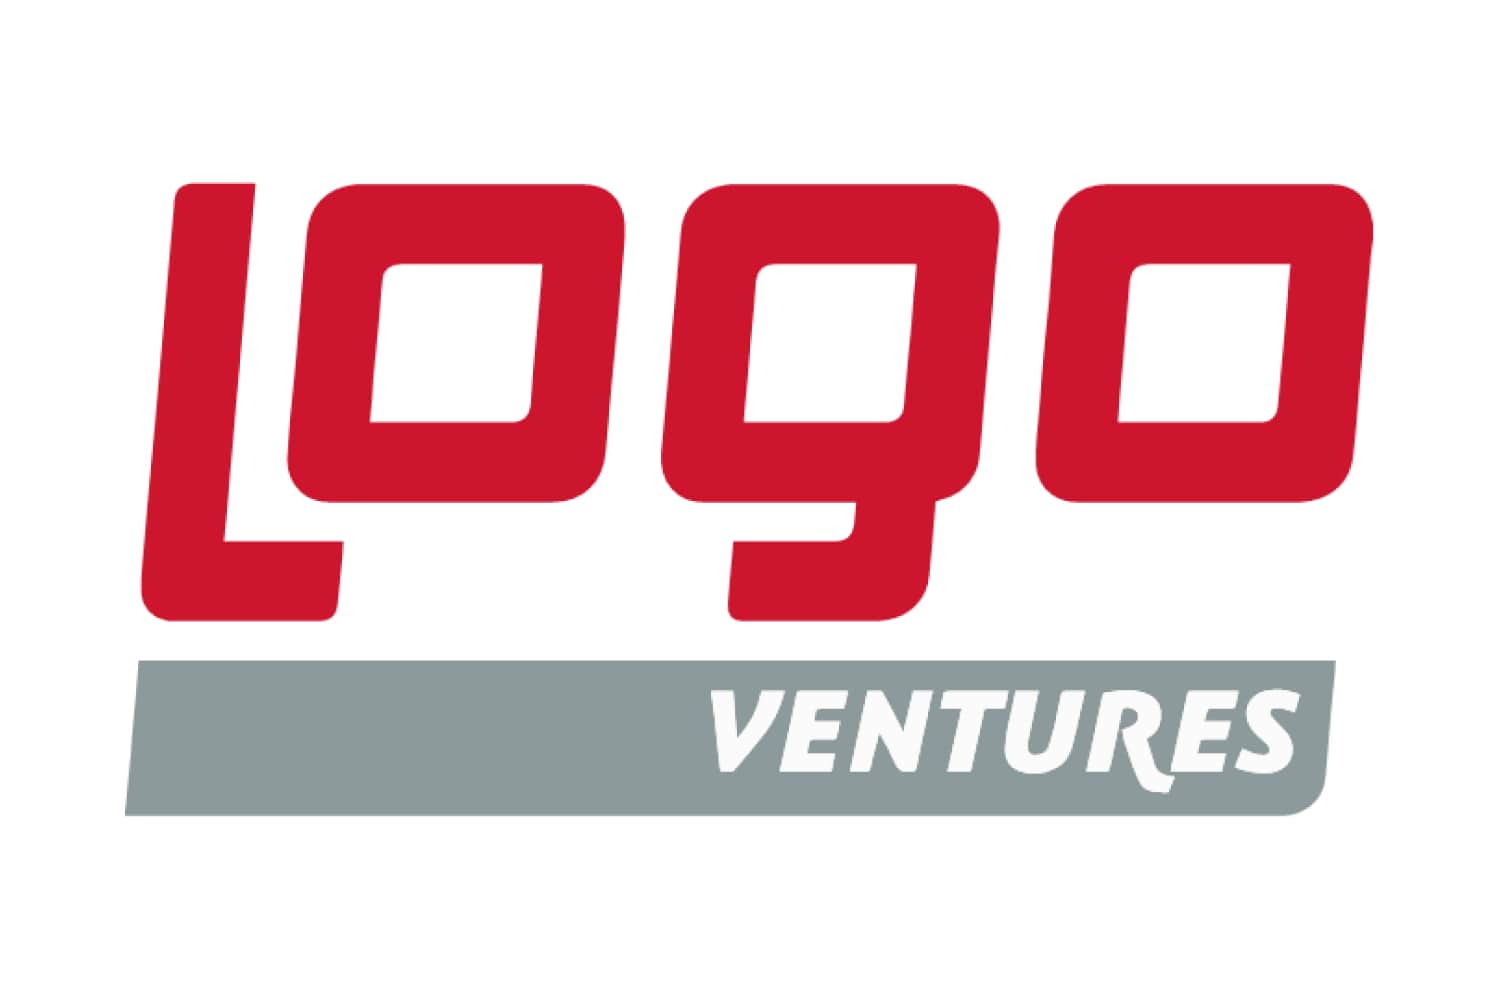 Logo Ventures logo